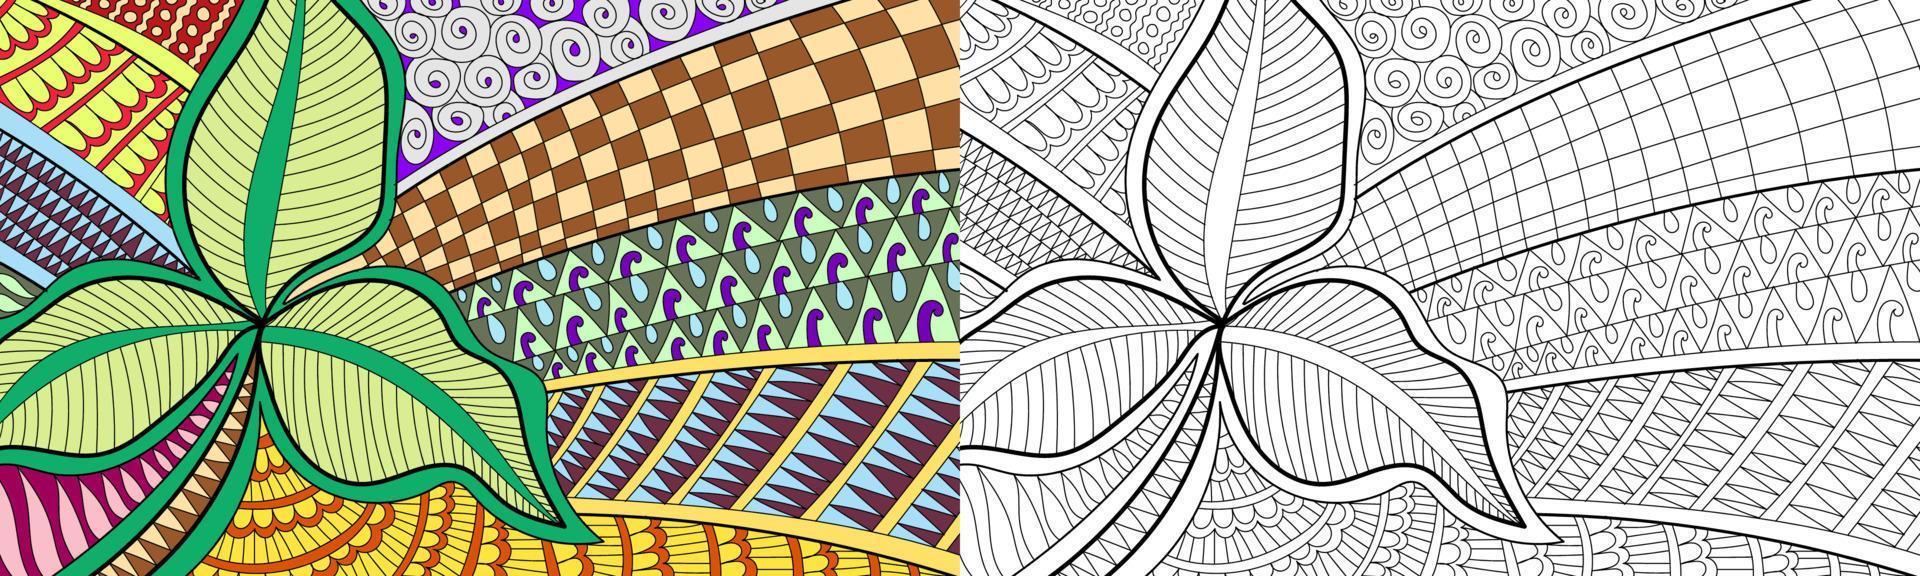 dekorativa tropiska blad henna stil målarbok vektorillustration vektor